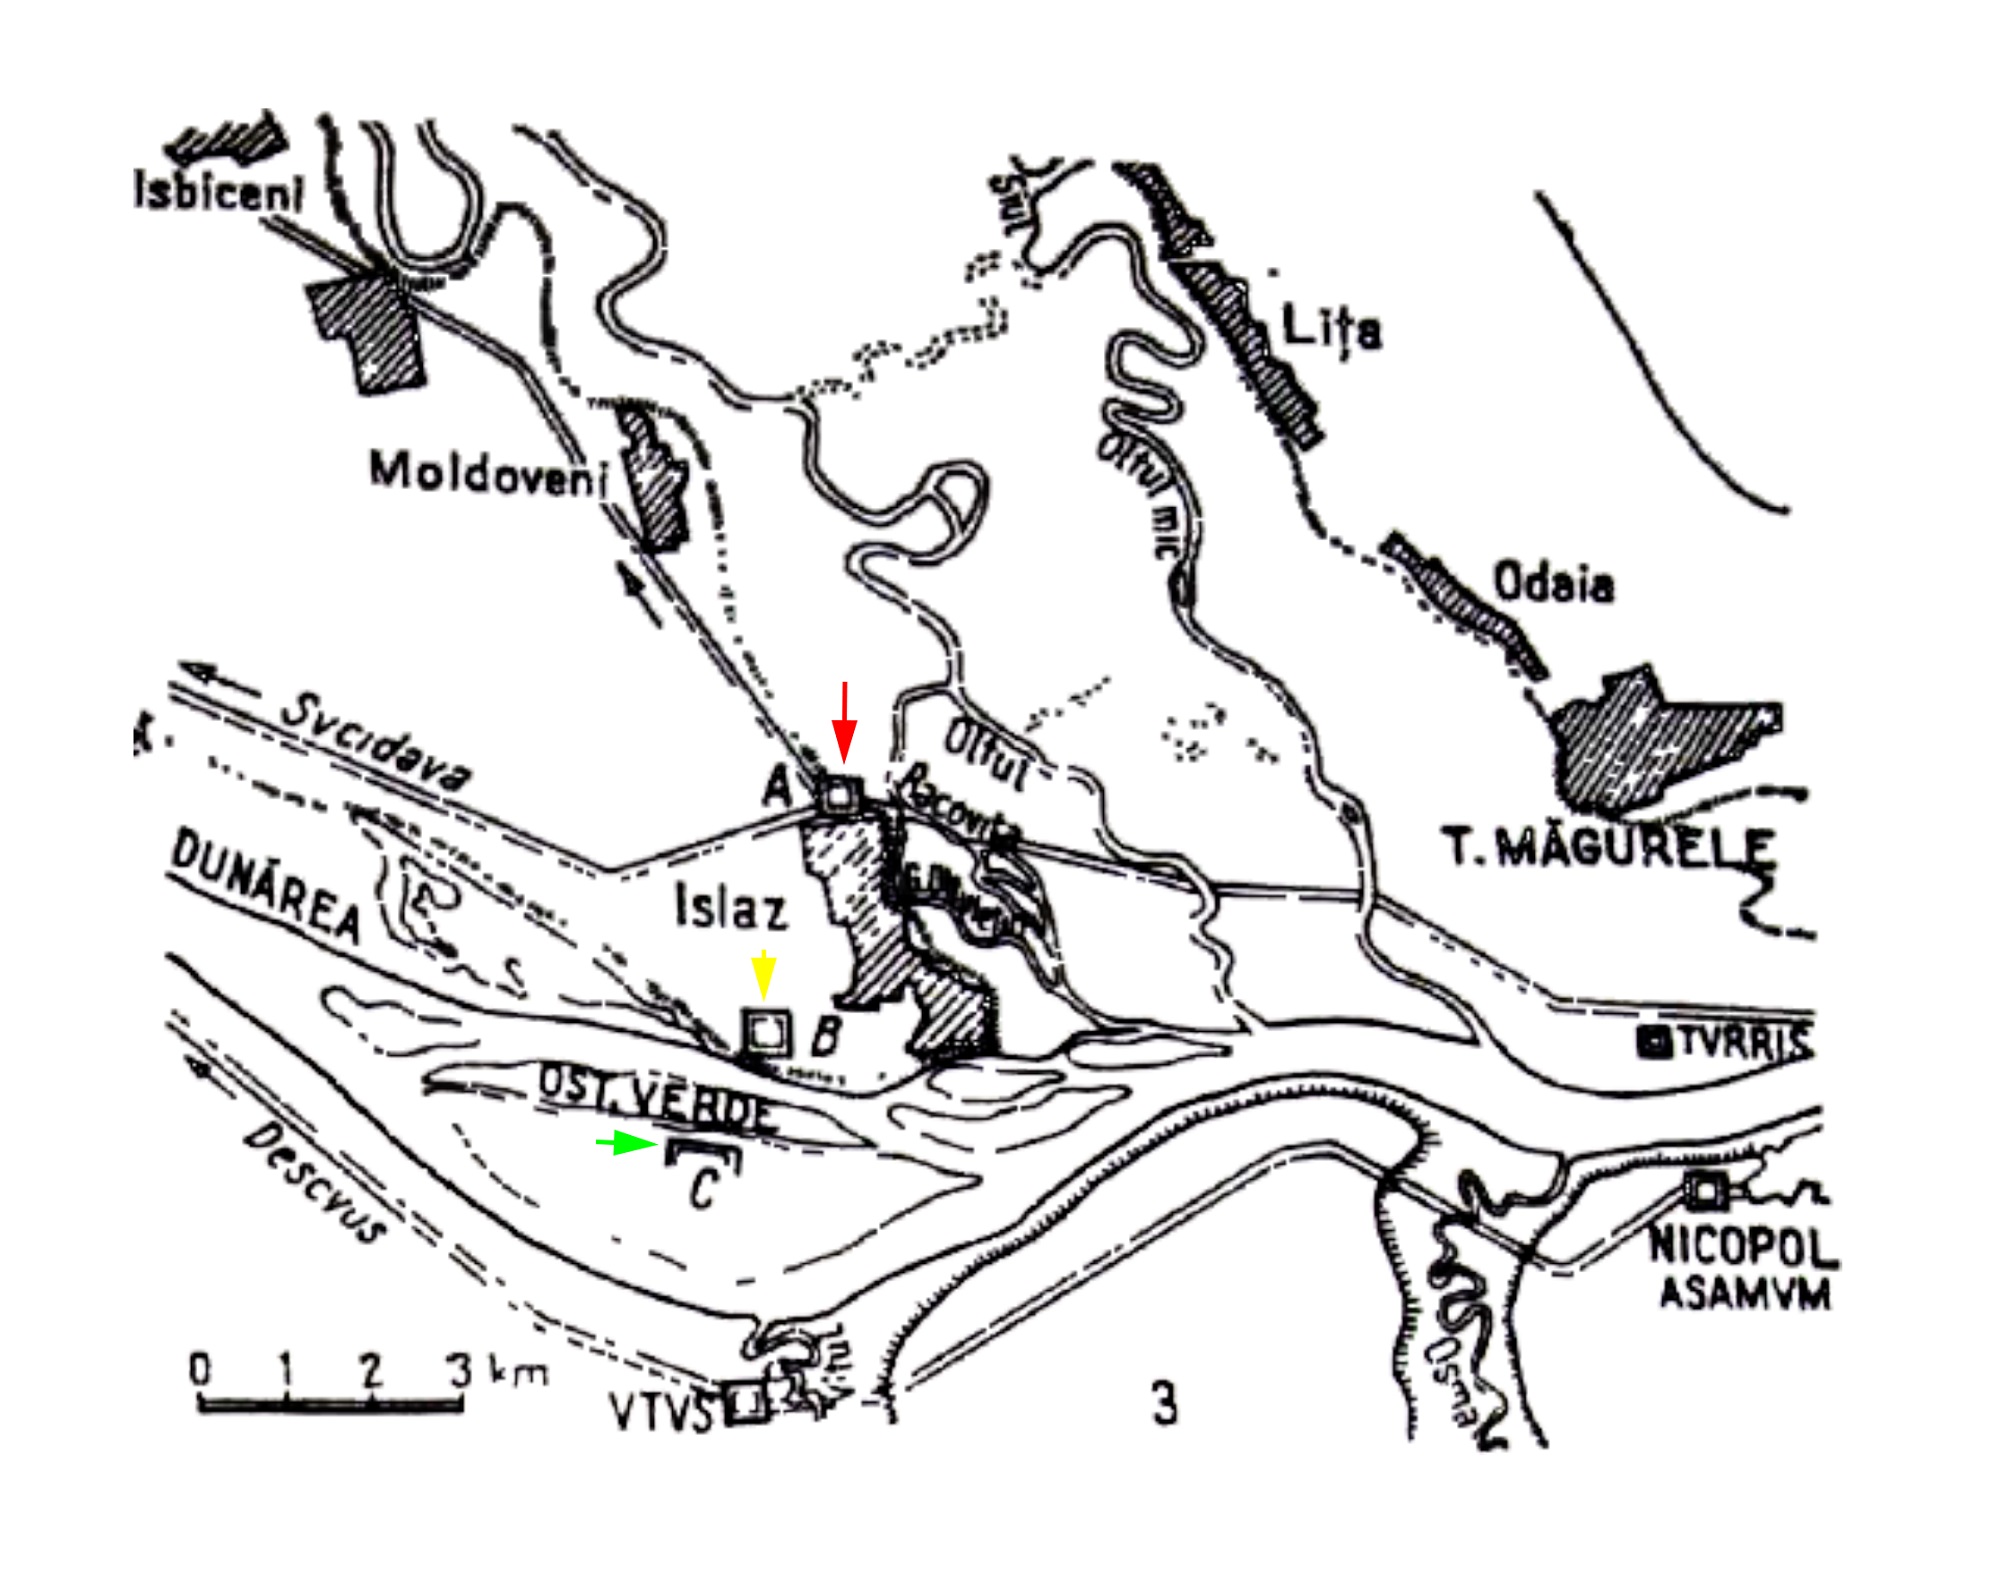 Islaz - castrele de la Islaz (Tudor 1978, 266, fig. 68/3)